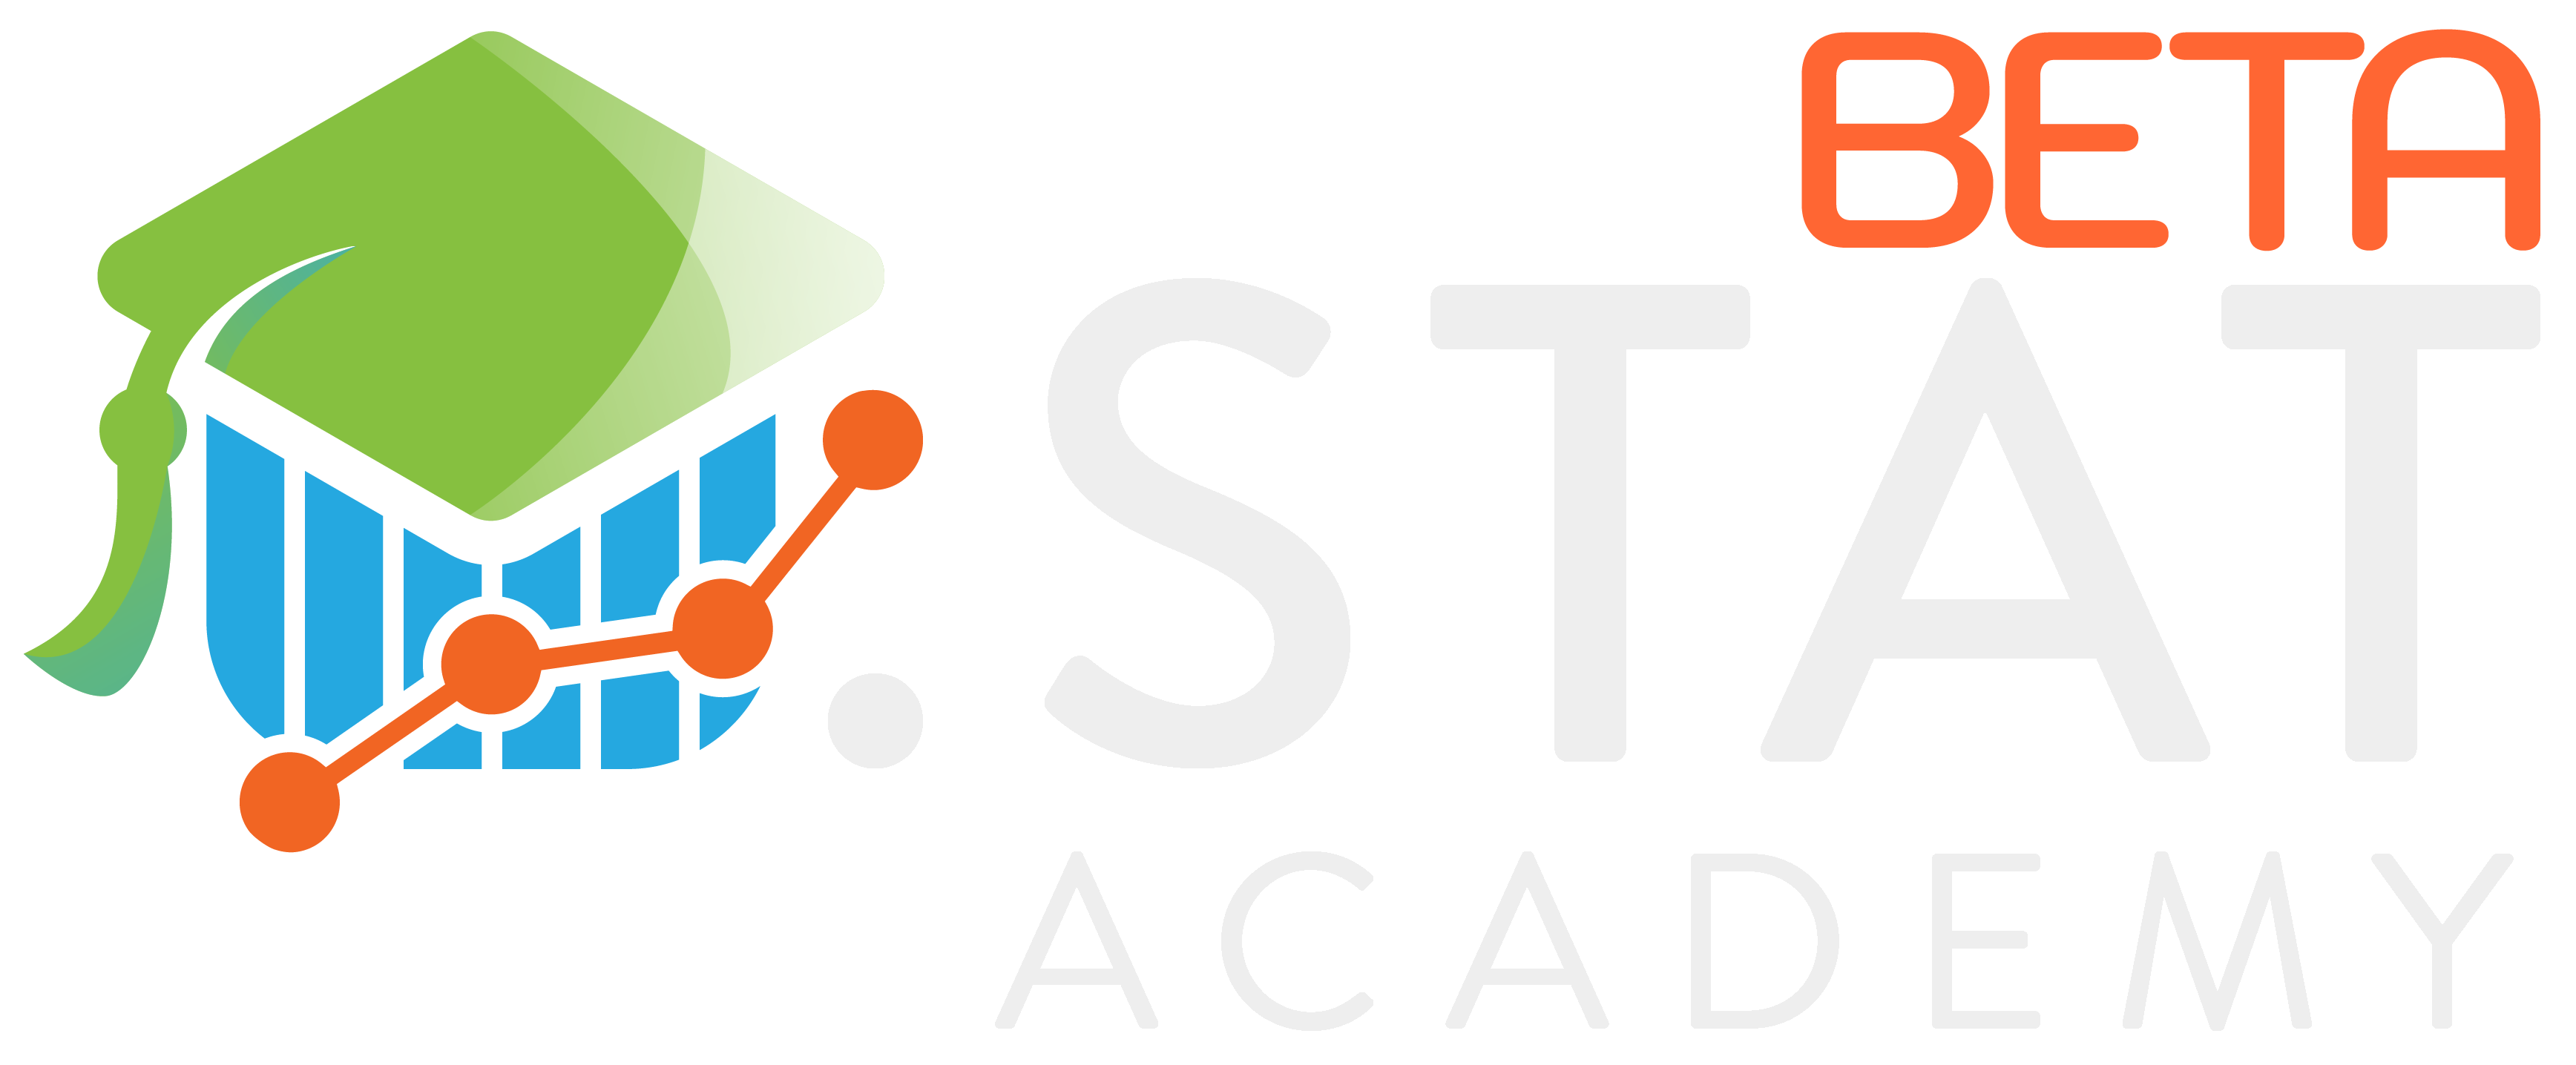 .Stat Academy